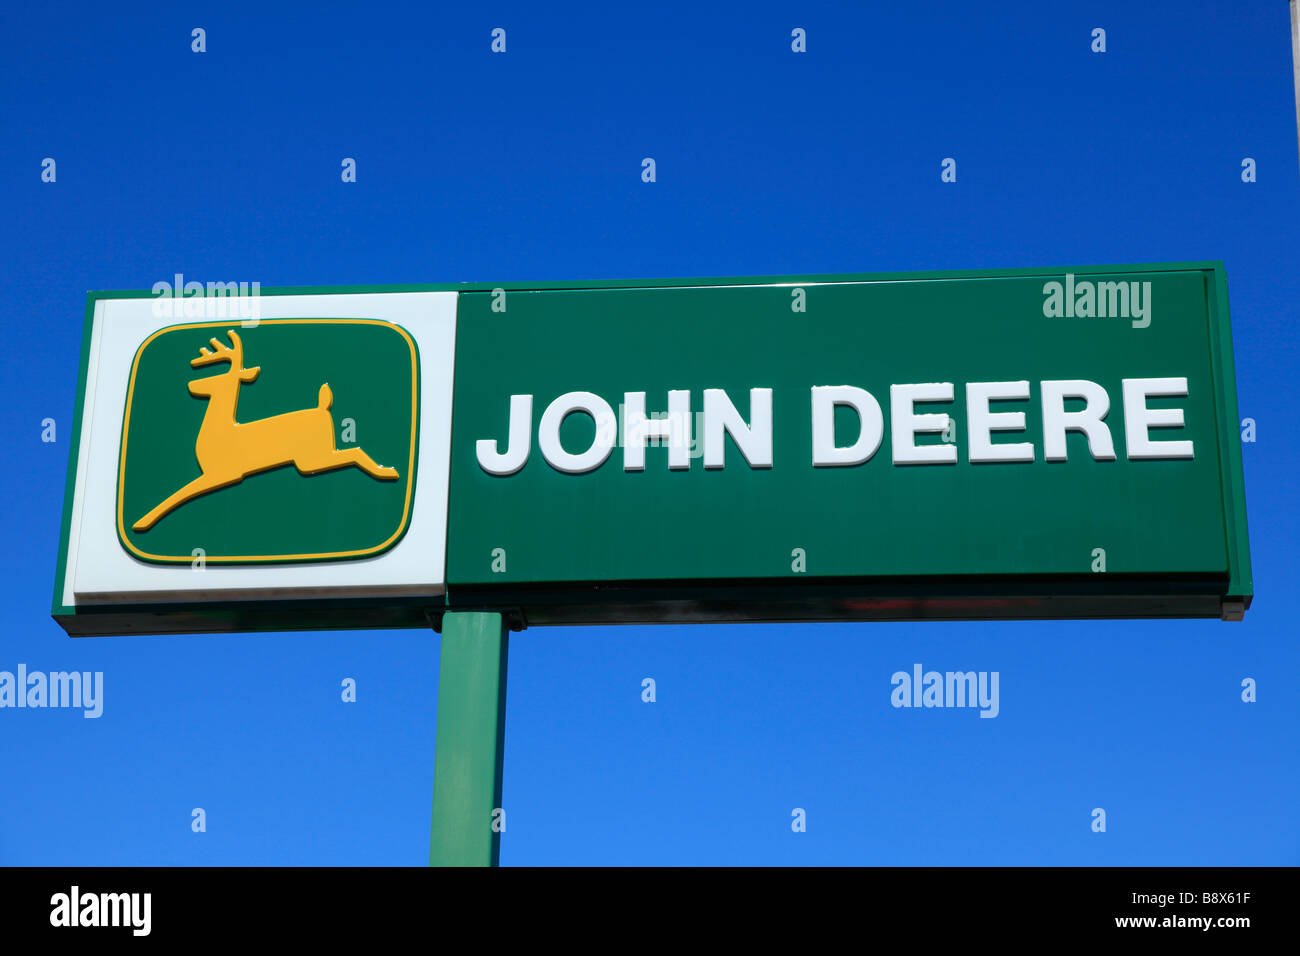 John Deere Logo Sign On A Retail Storefront Stock Photo - Download